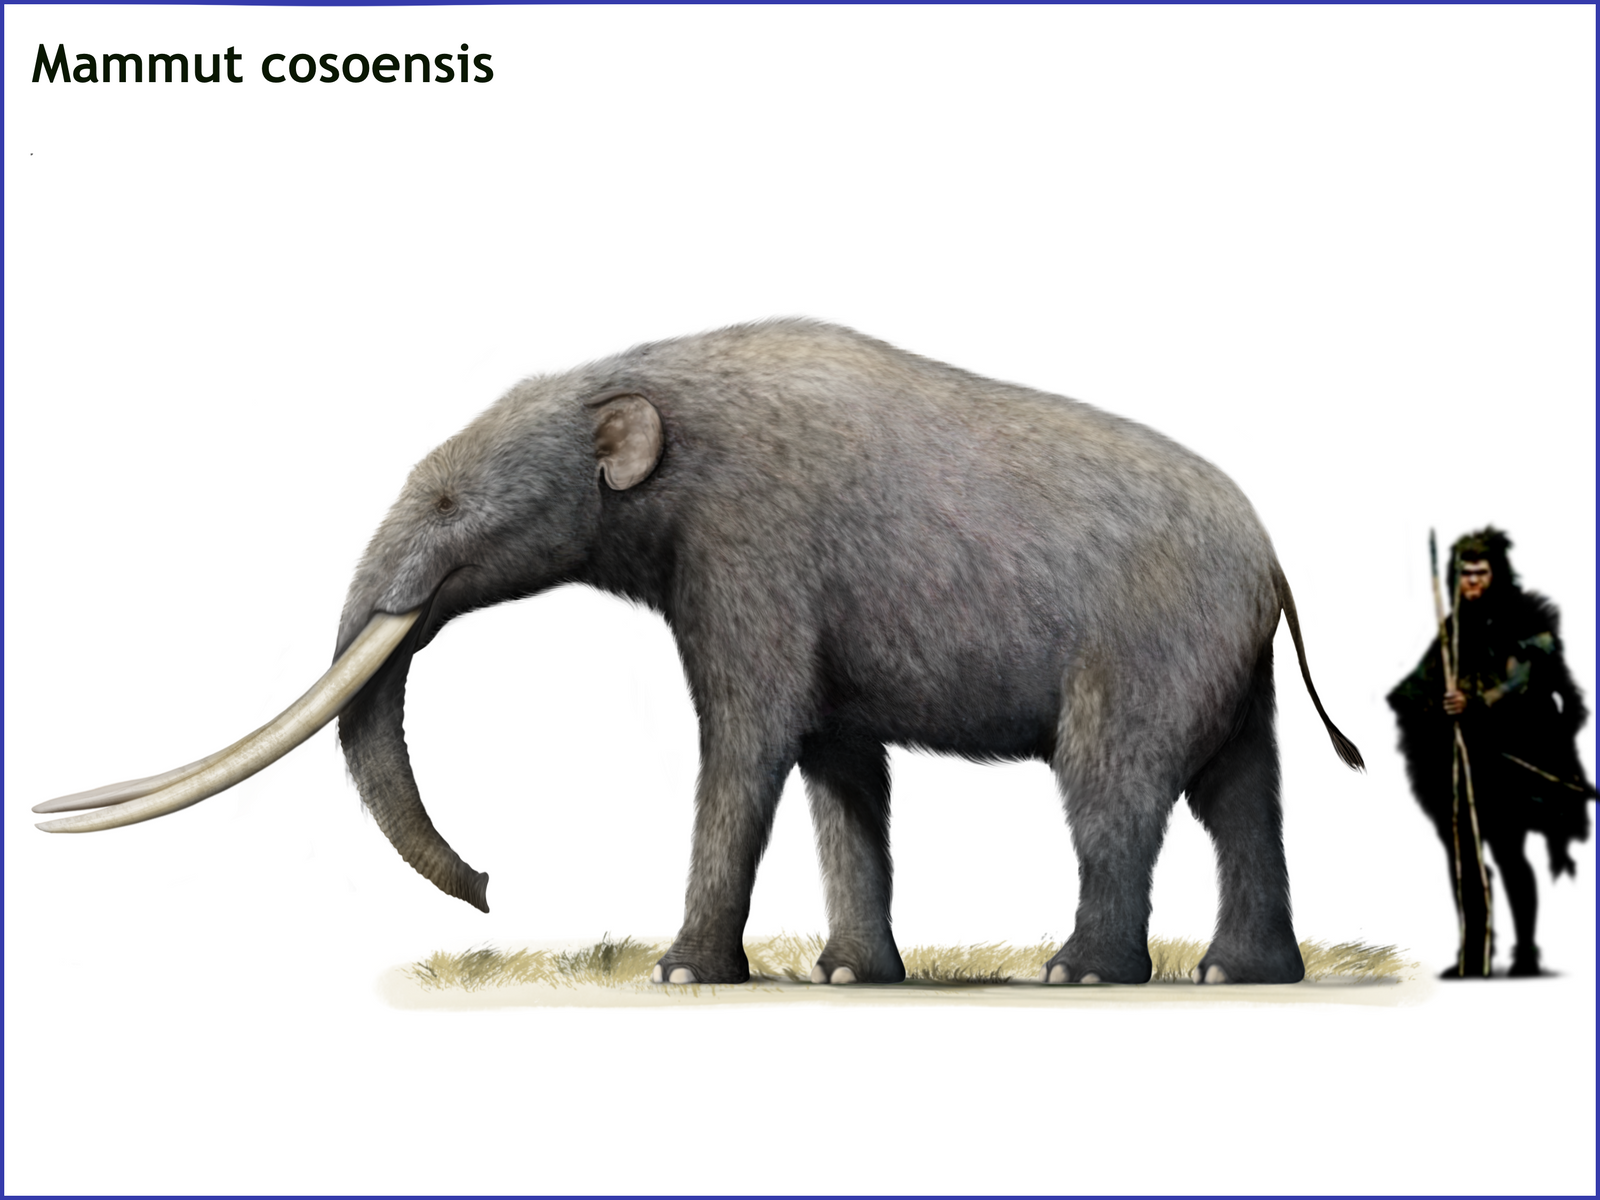 Mammut cosoensis by cisiopurple on DeviantArt